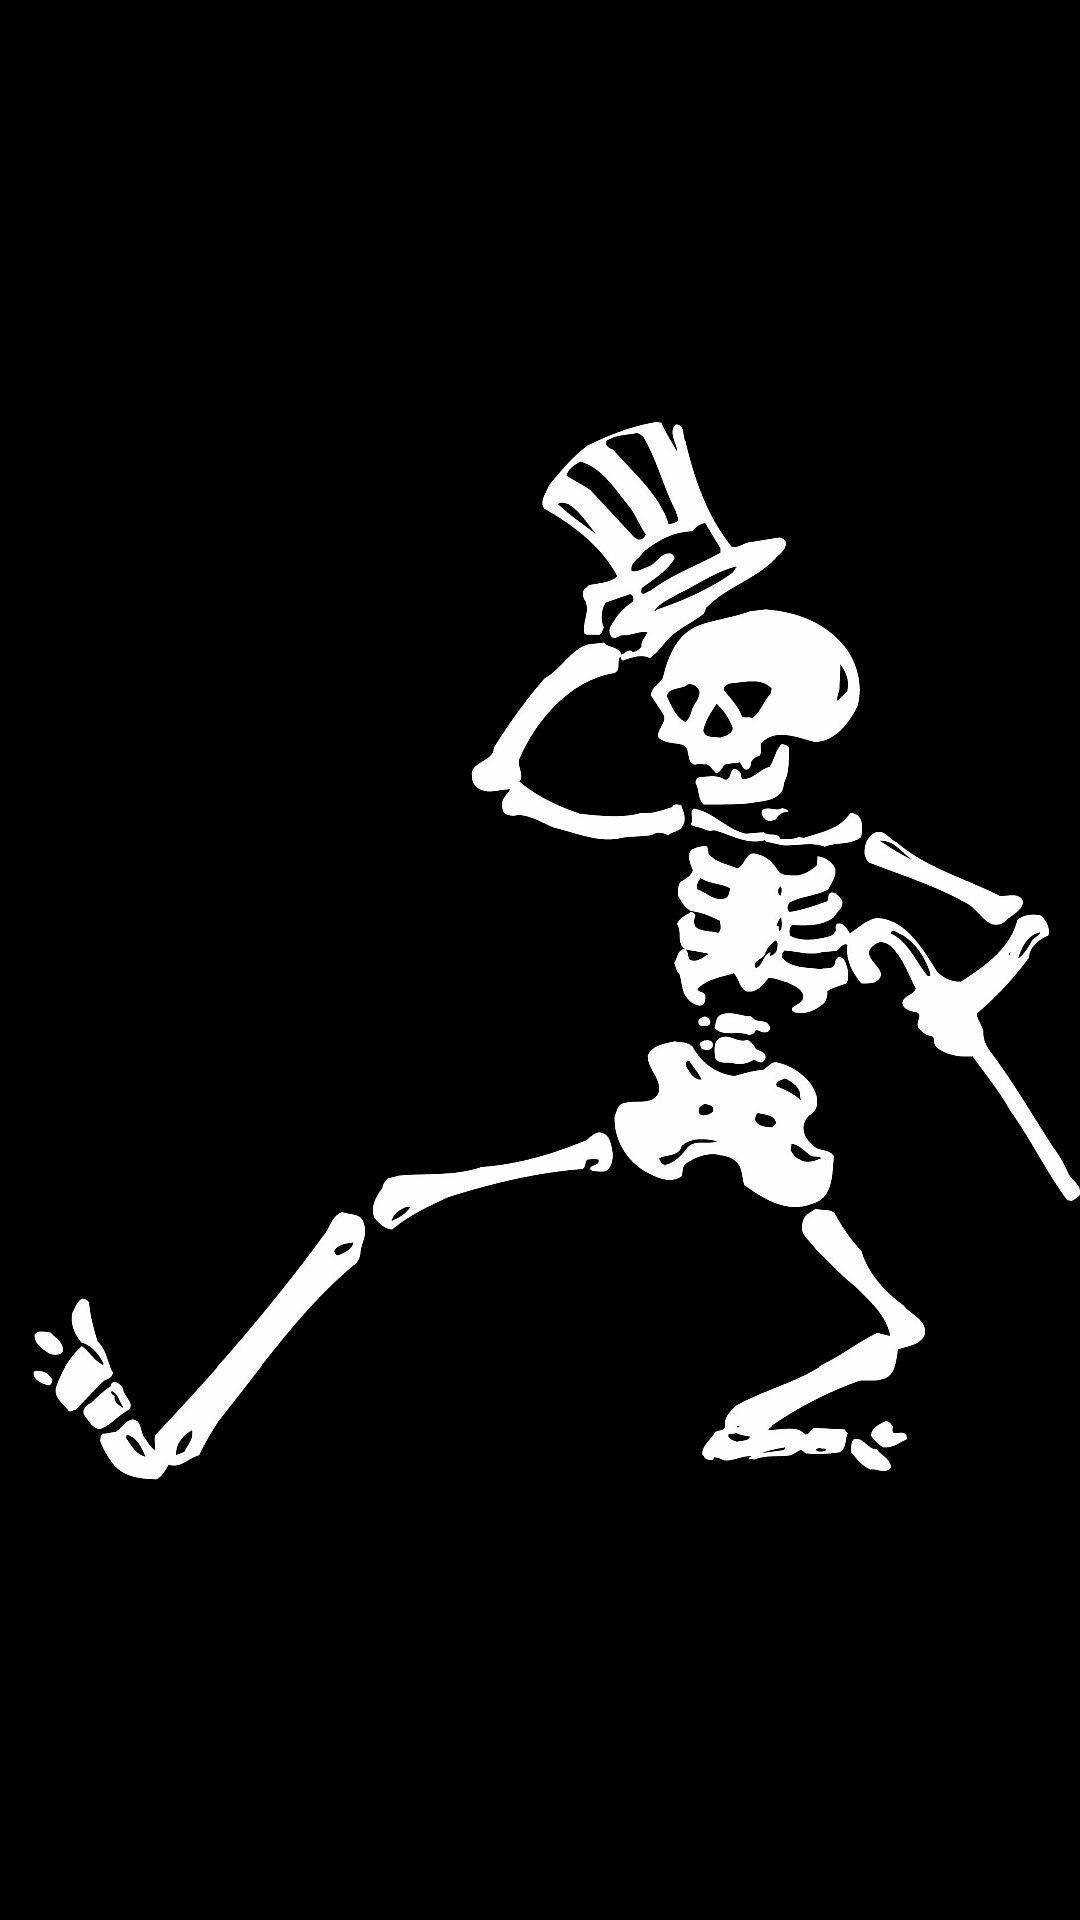 Tweetdeck Fall Wallpaper Skeleton Art Phone Backgrounds - Grateful Dead Skeleton Top Hat - HD Wallpaper 